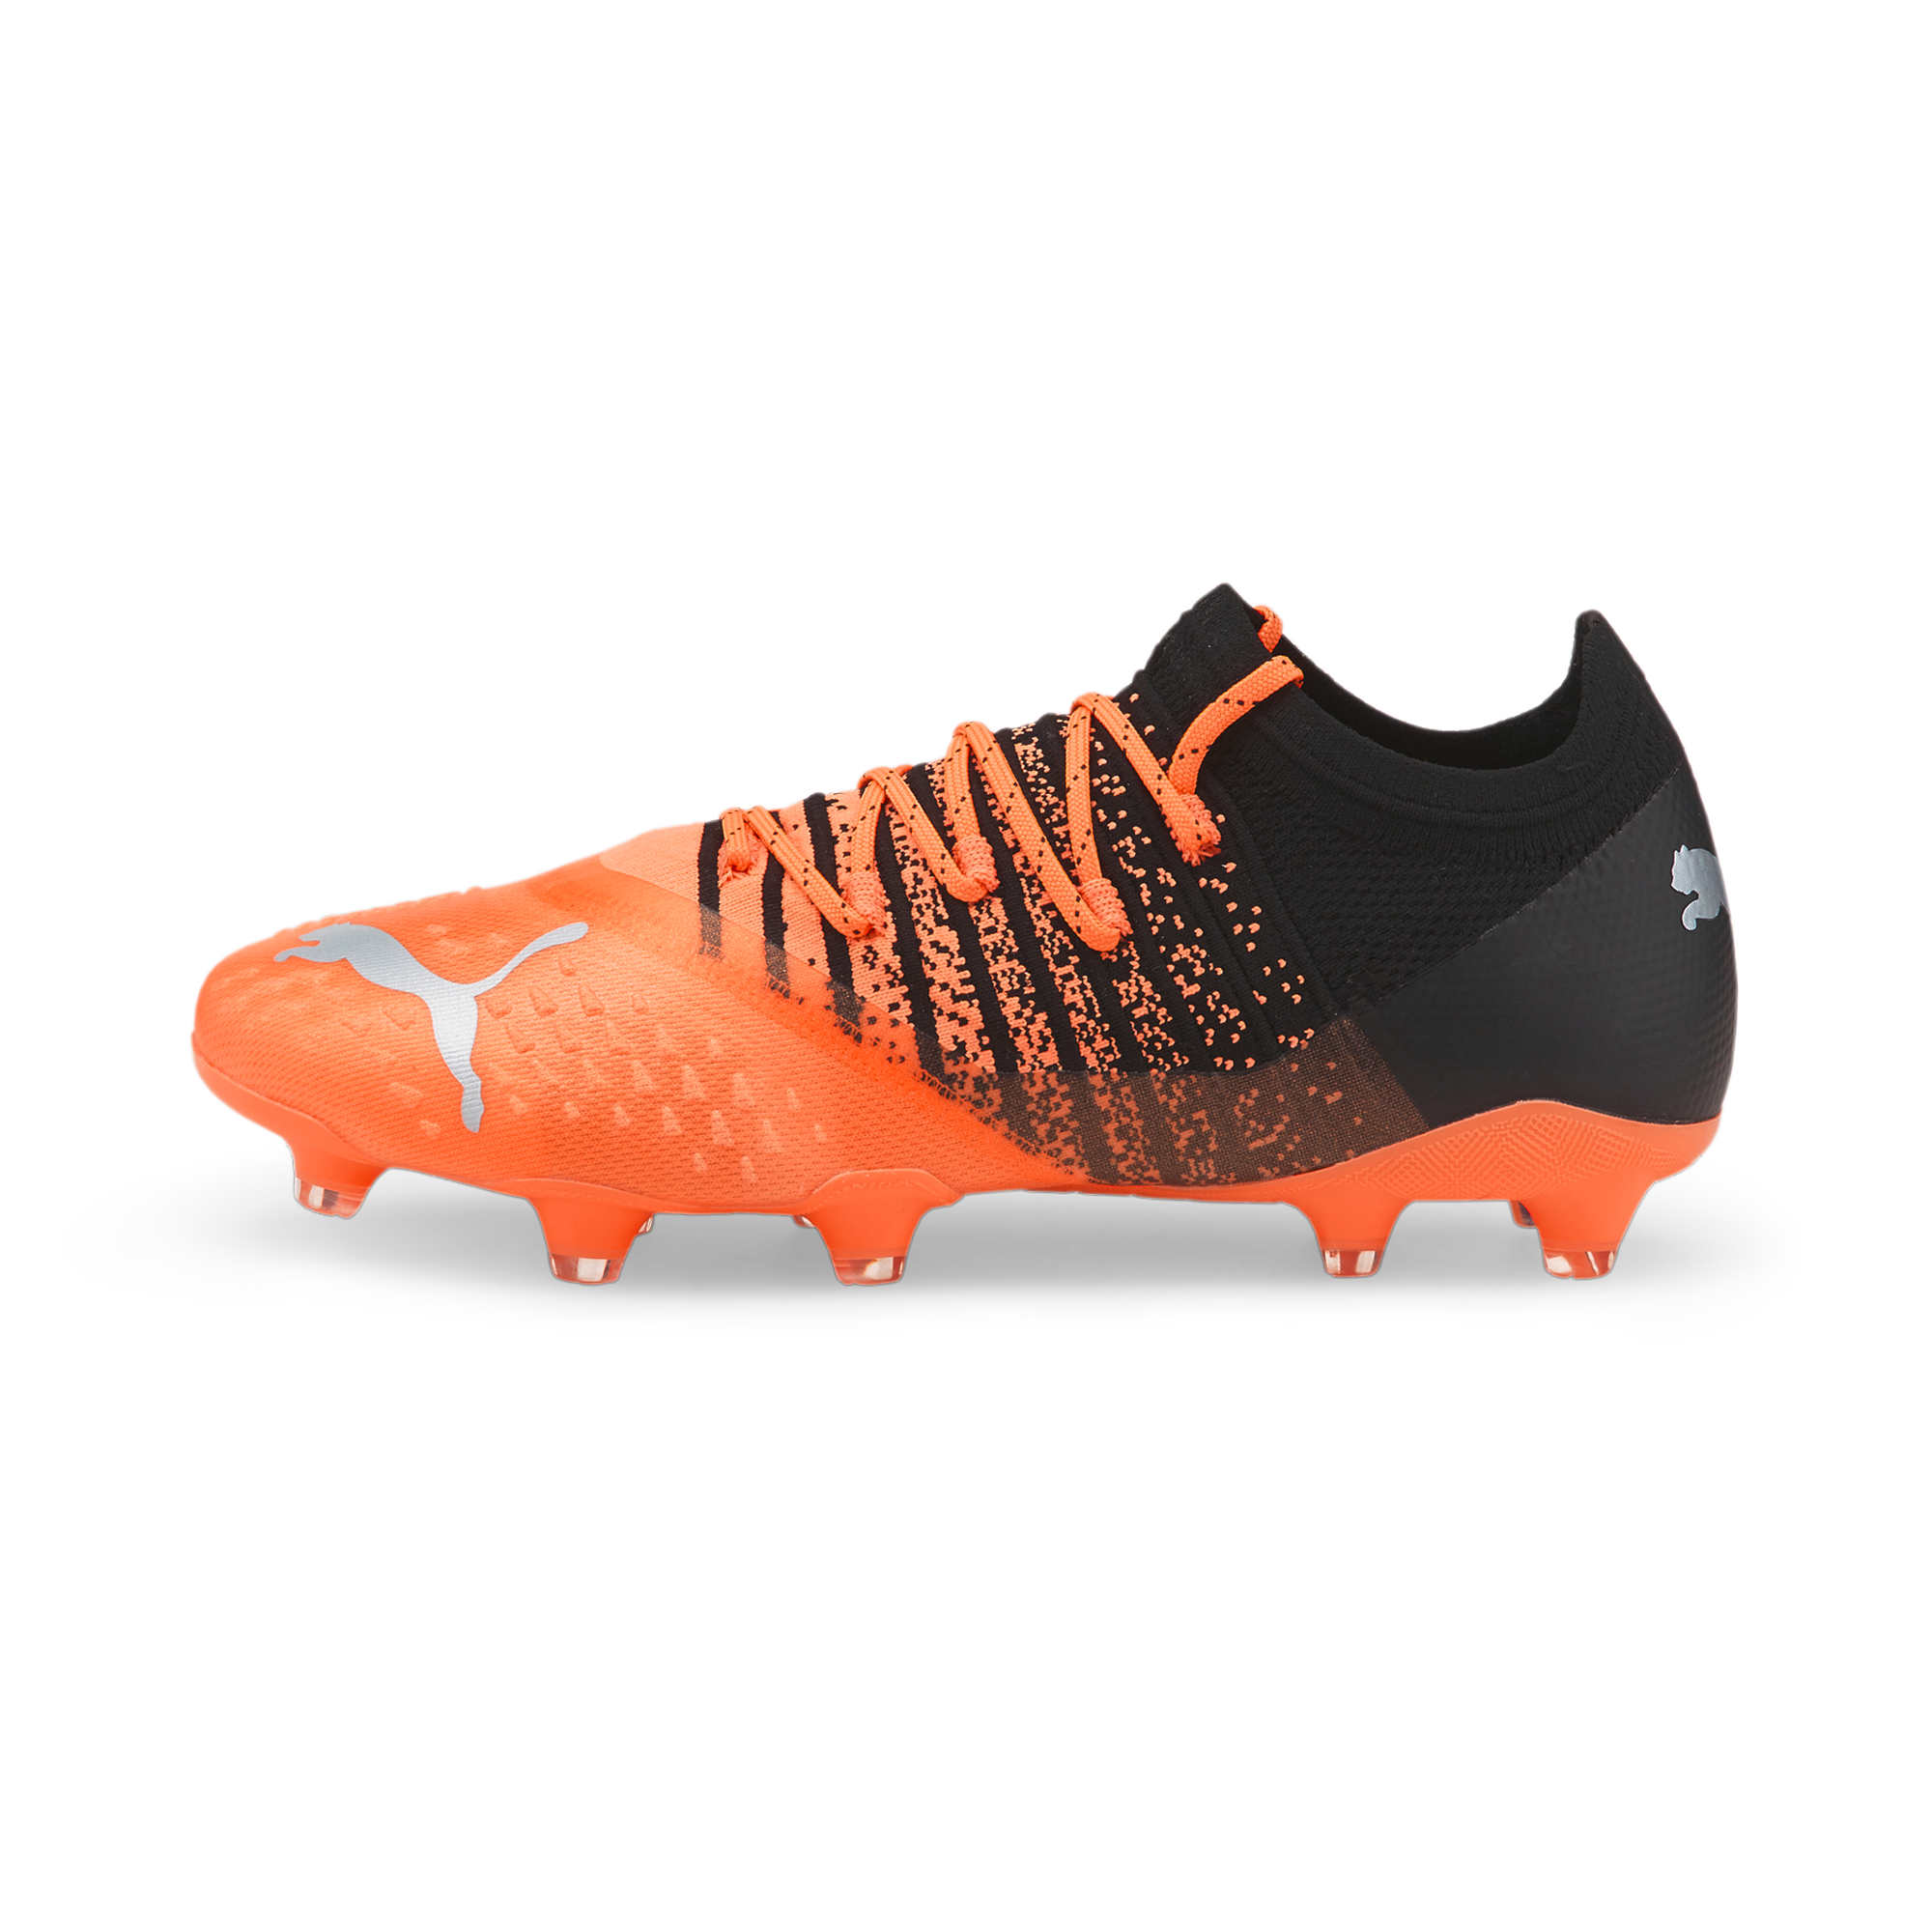 Wennen aan Wiskundige kin stefanssoccer.com:Puma Future Z 2.3 FG/AG Soccer Cleats - Orange / Black